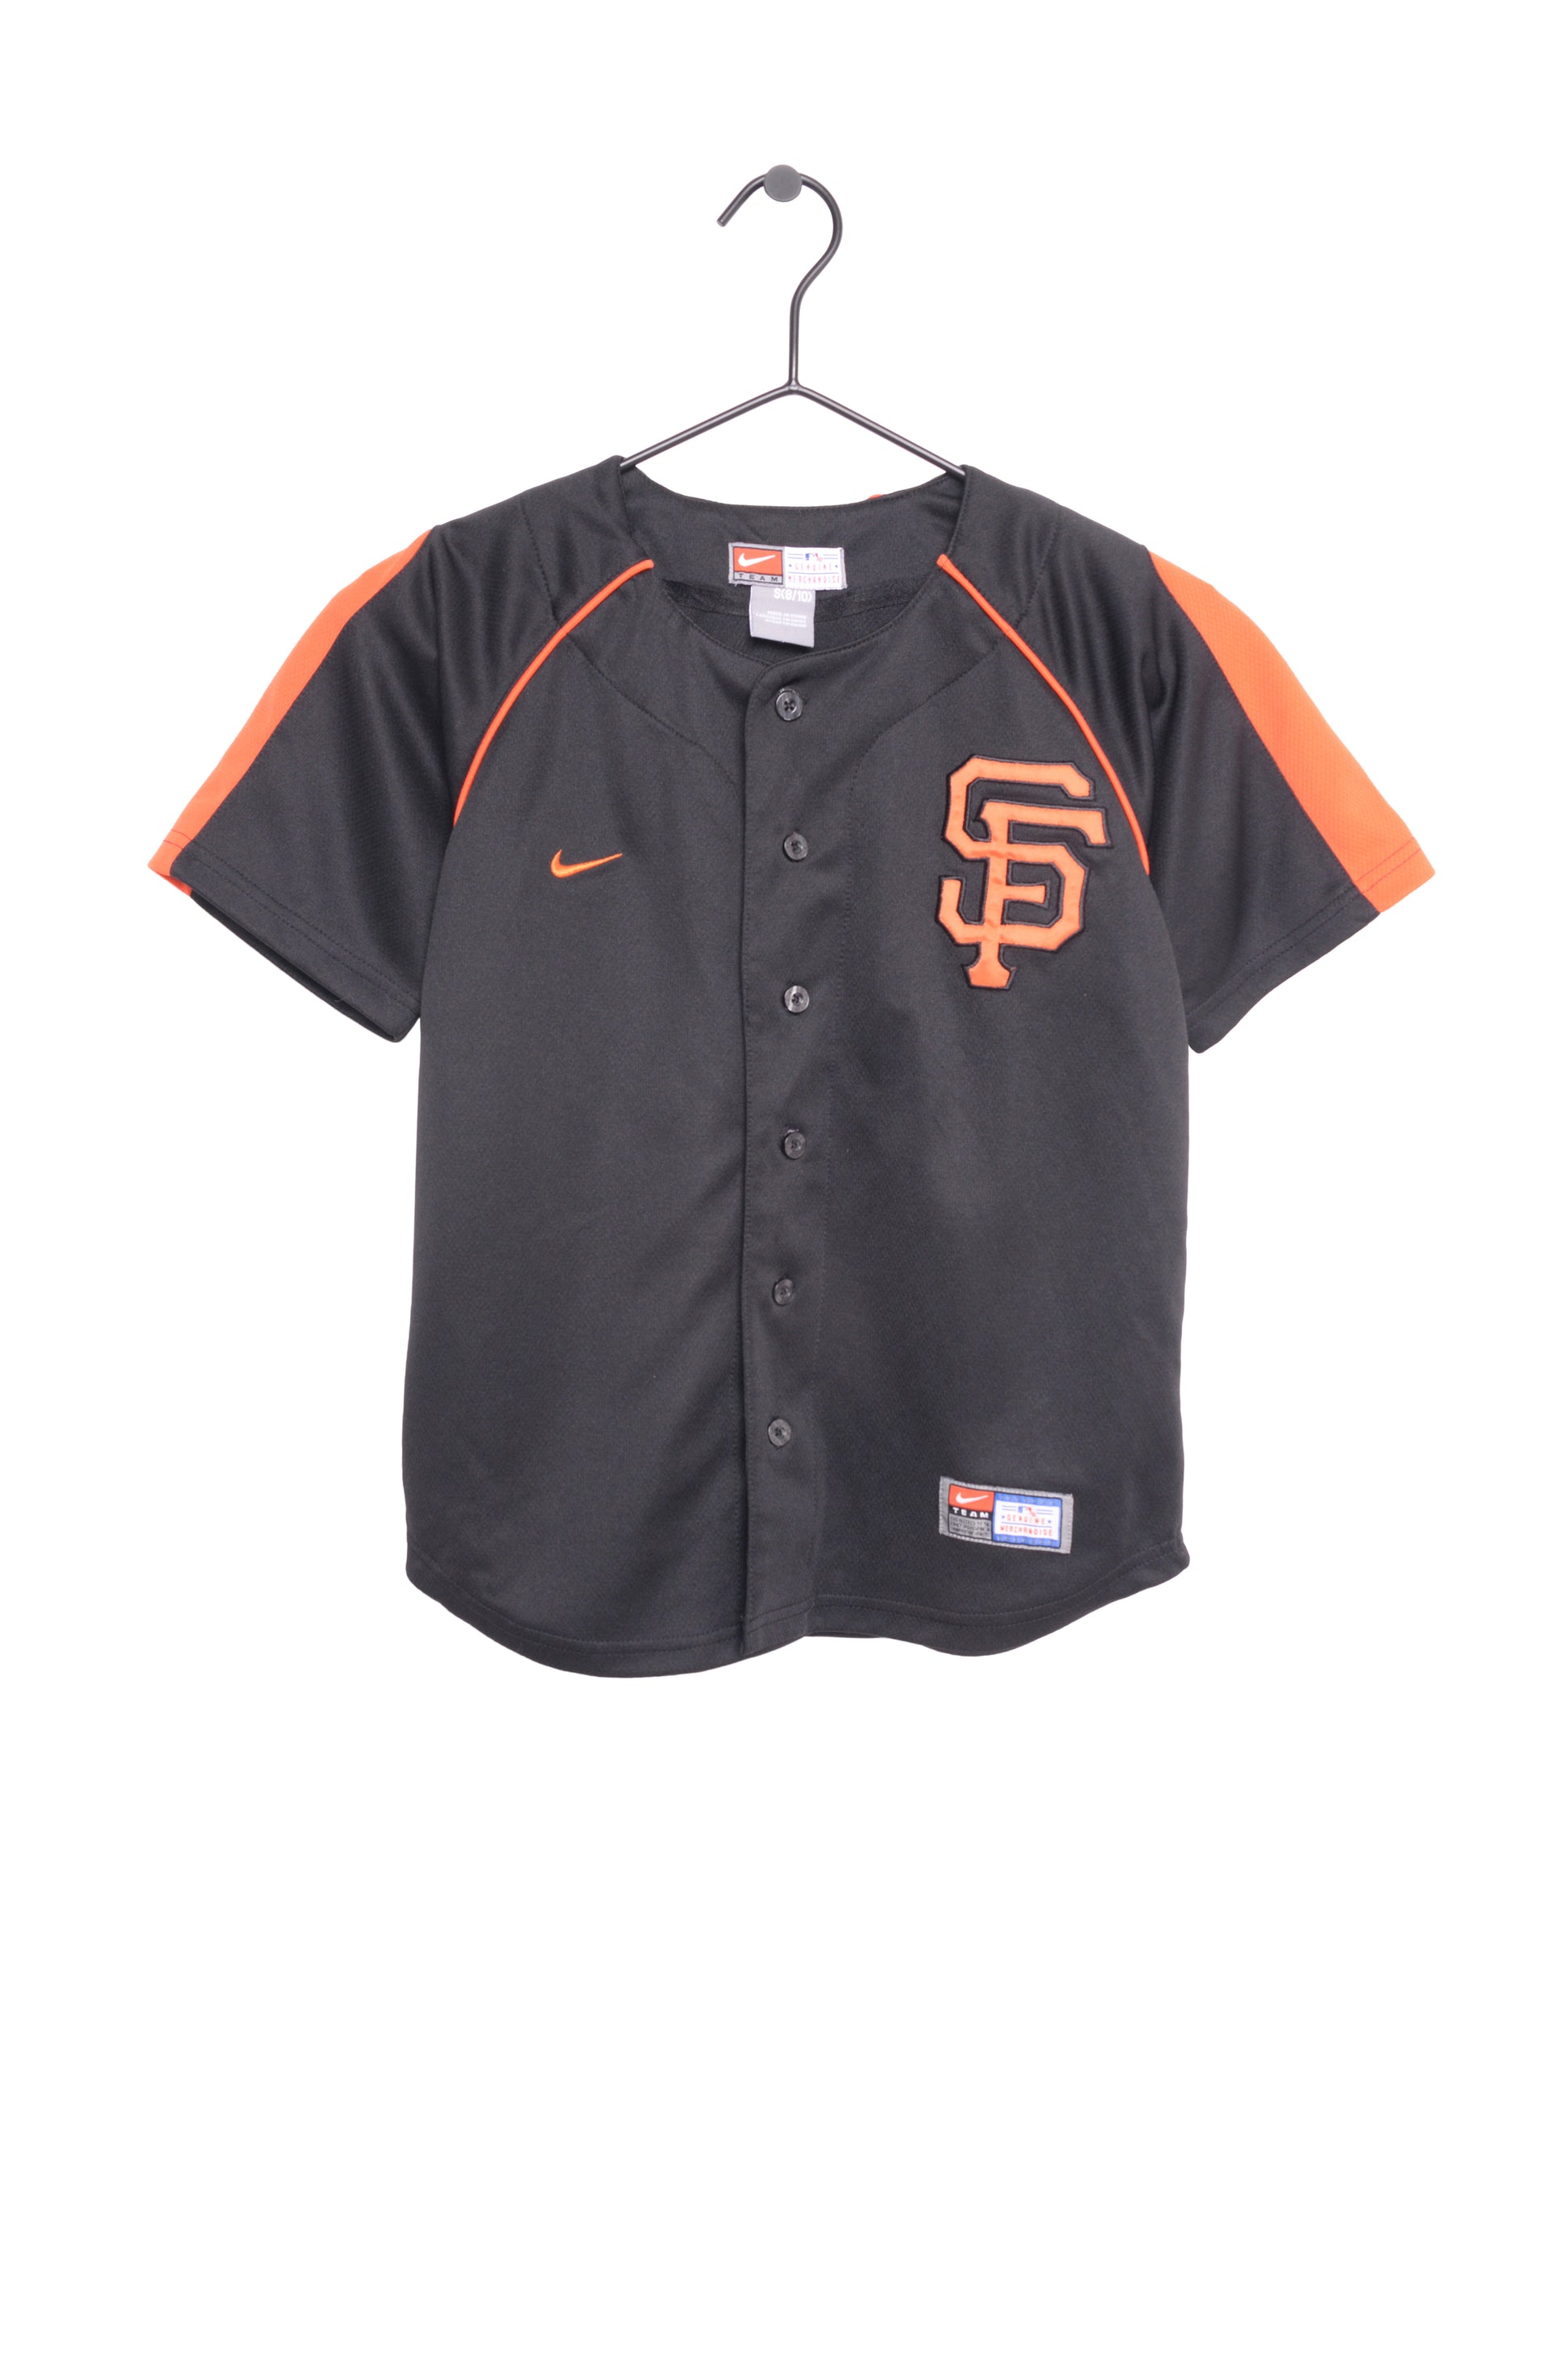 Men's San Francisco Giants Nike Orange Team T-Shirt